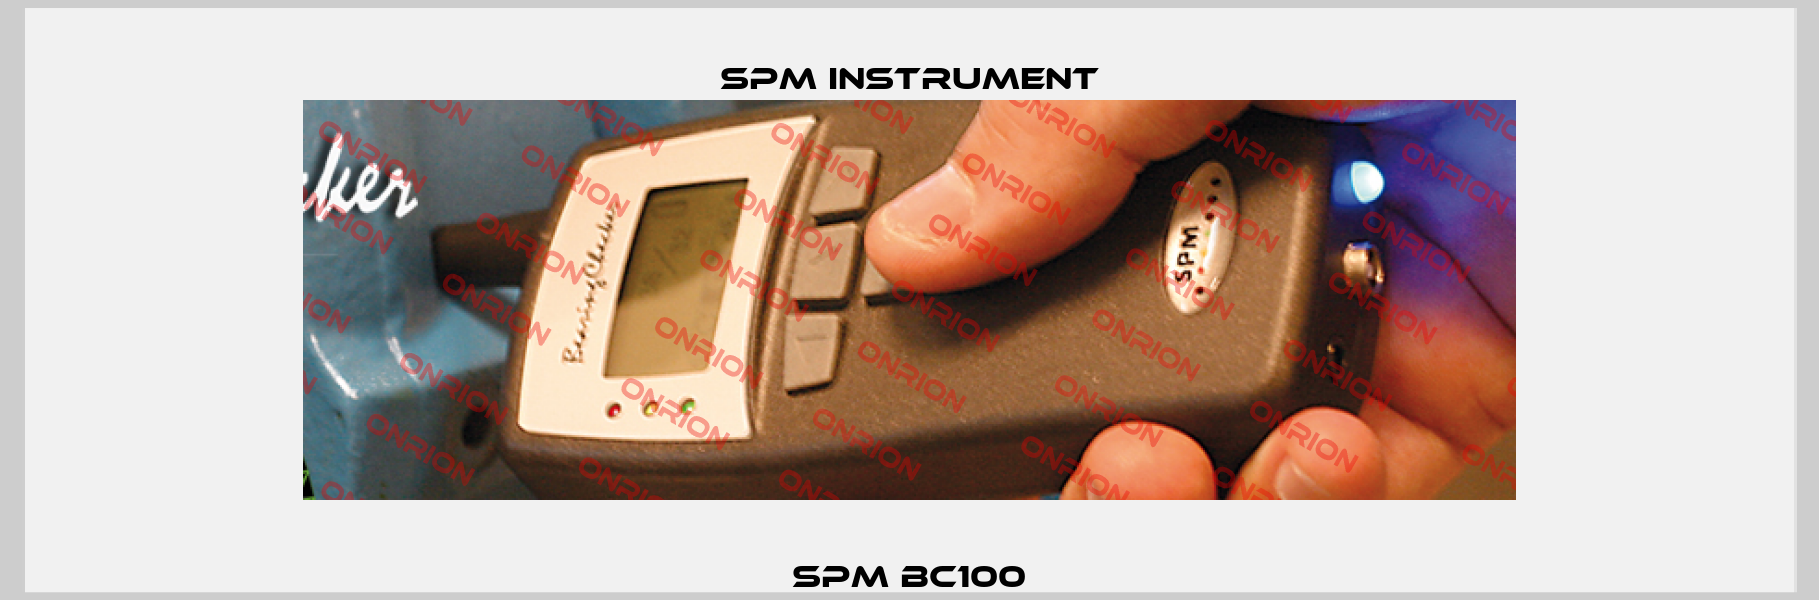 SPM BC100 SPM Instrument